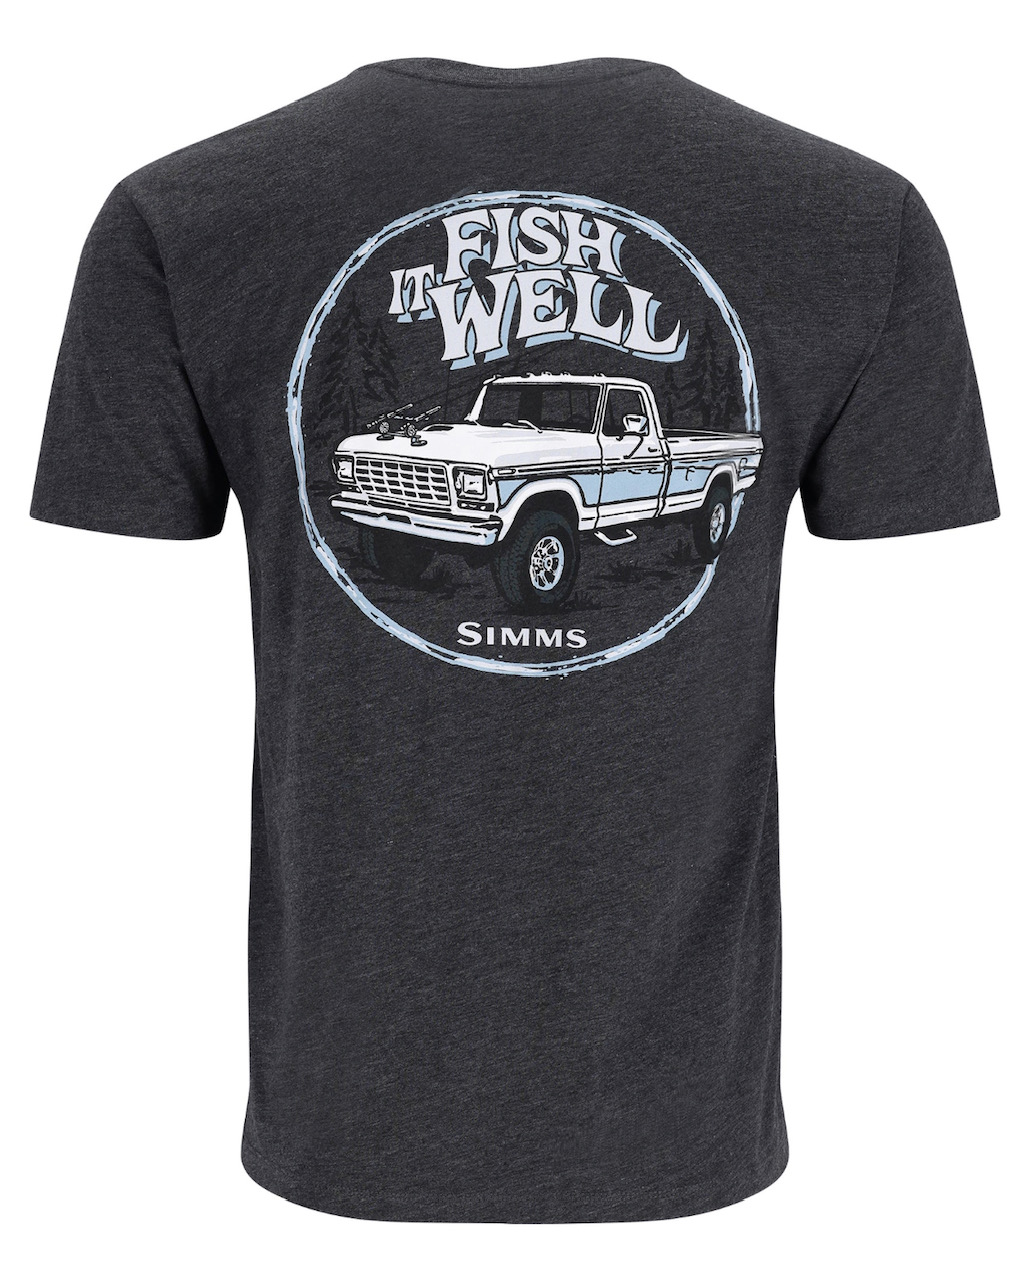 Simms Fishing Men's Fish It Well Truck T-Shirt